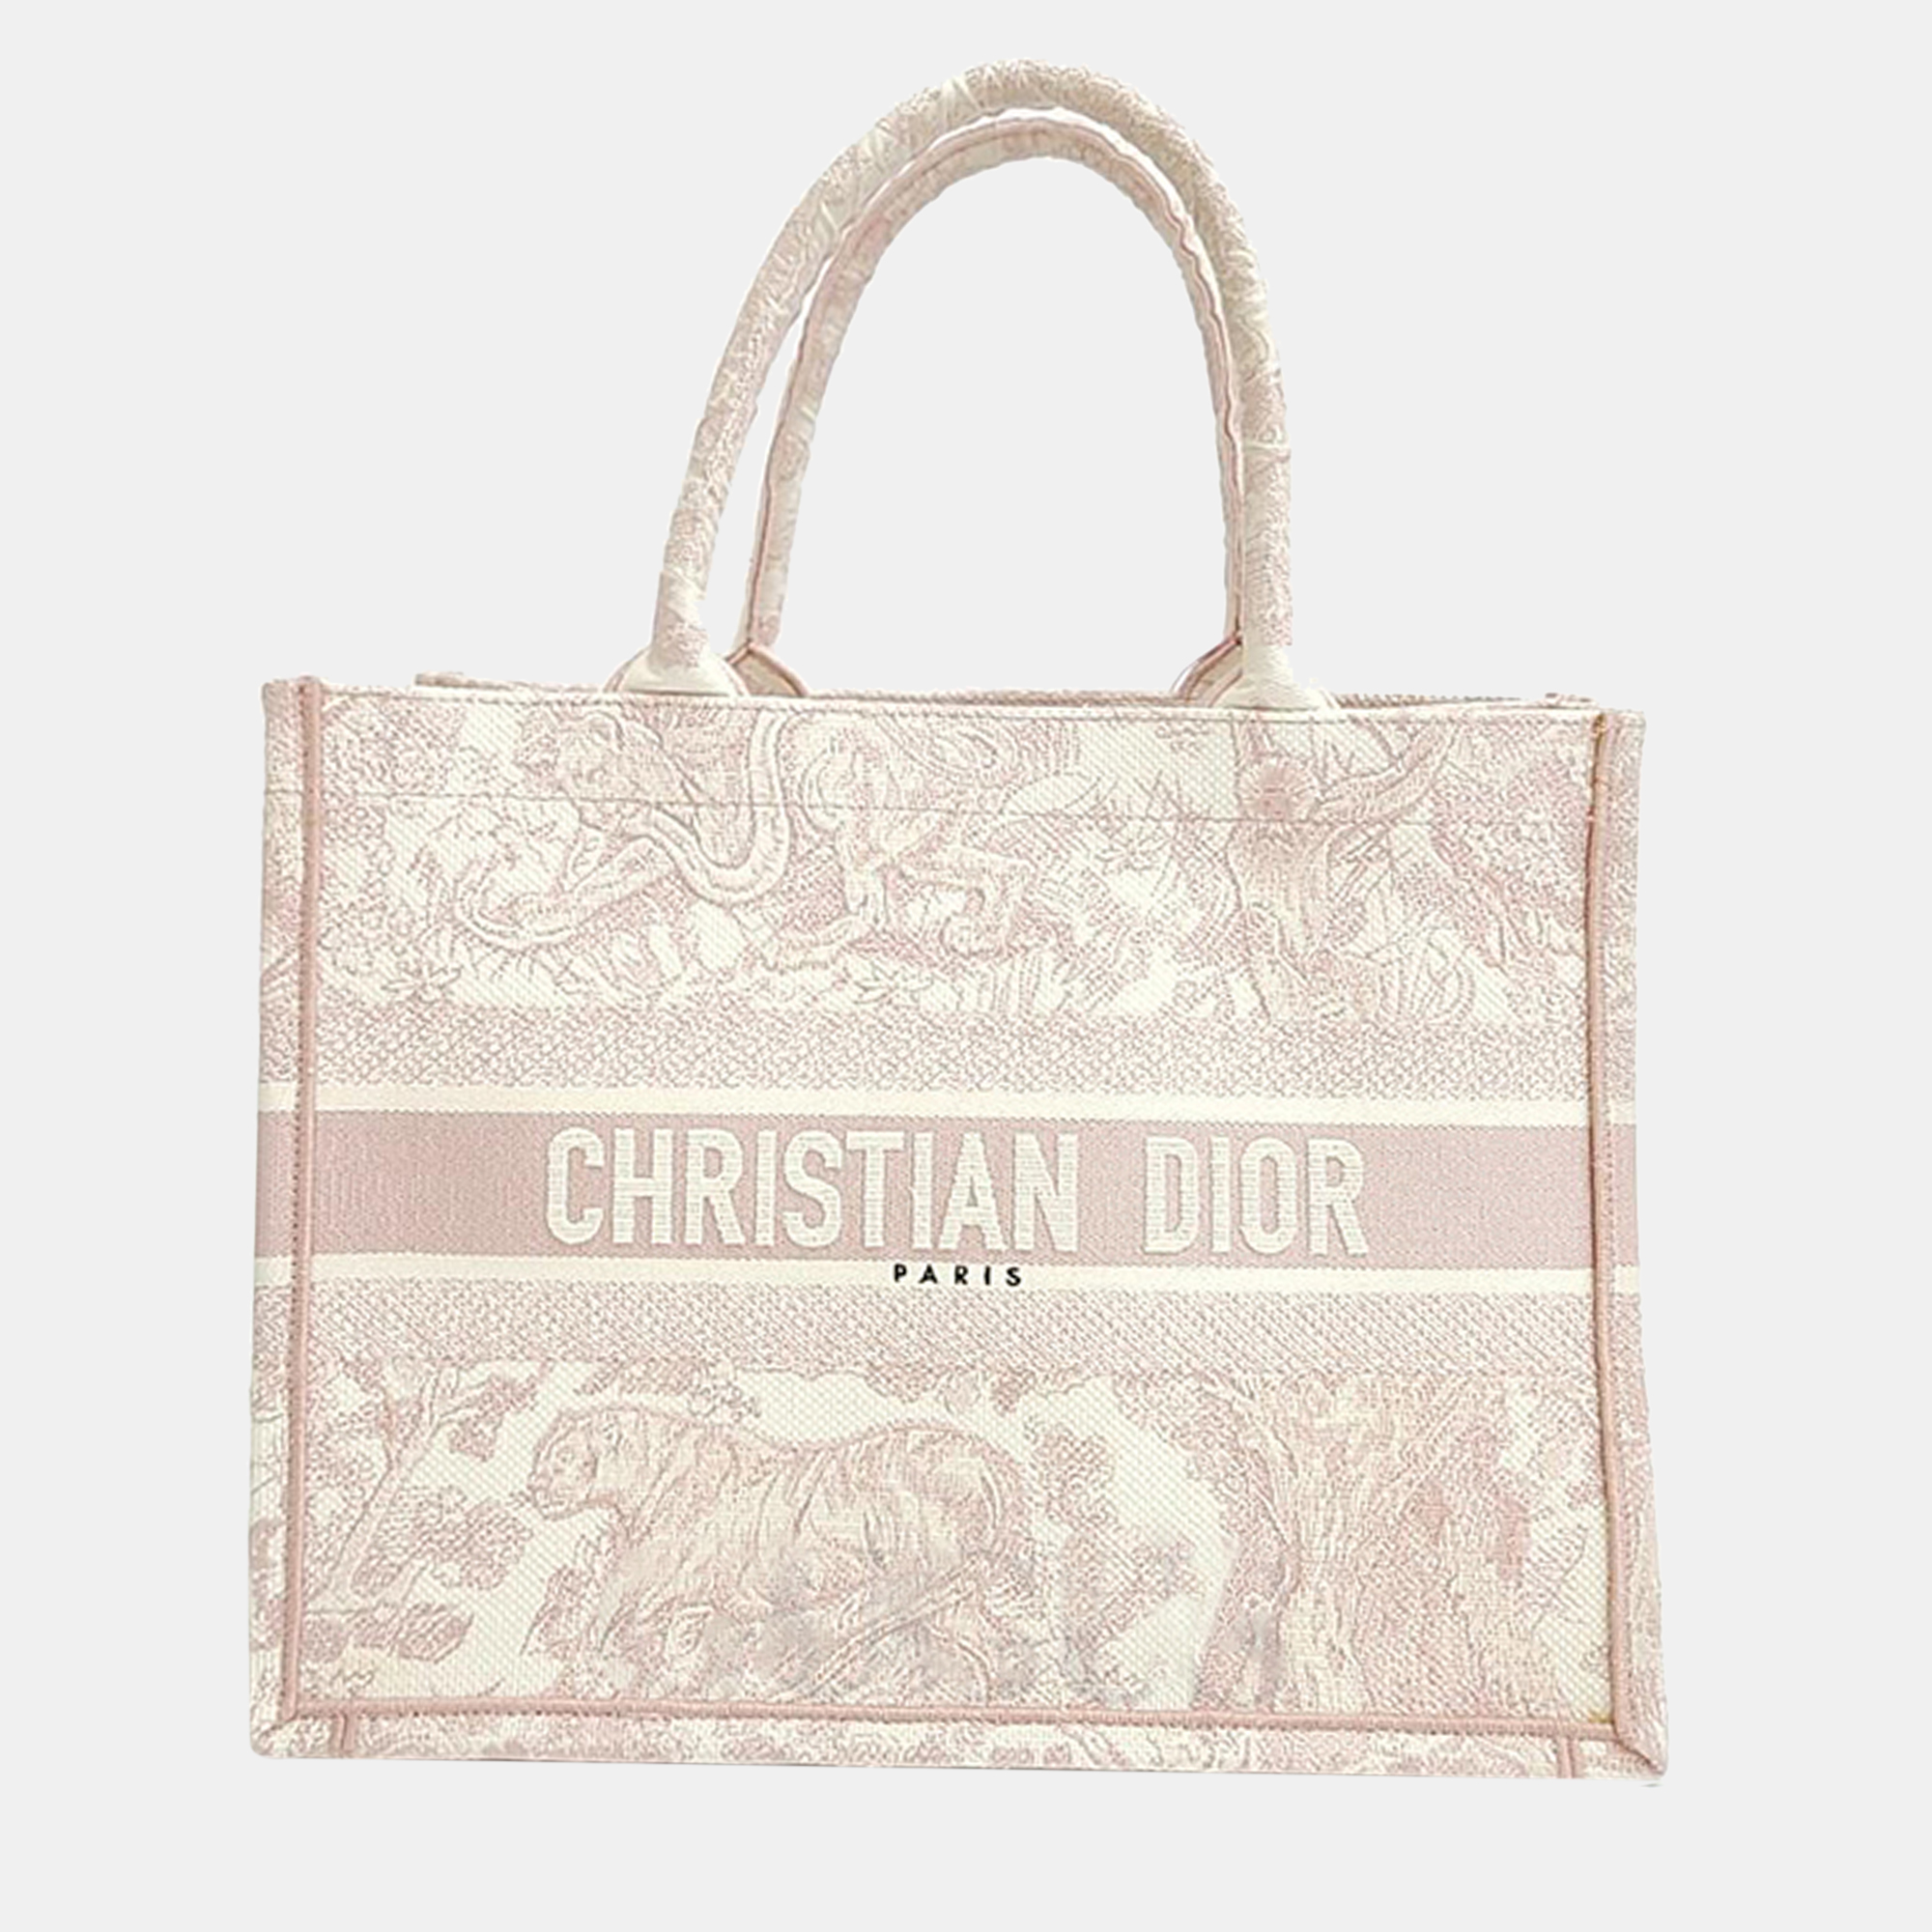 Christian dior pink/white canvas medium book tote bag